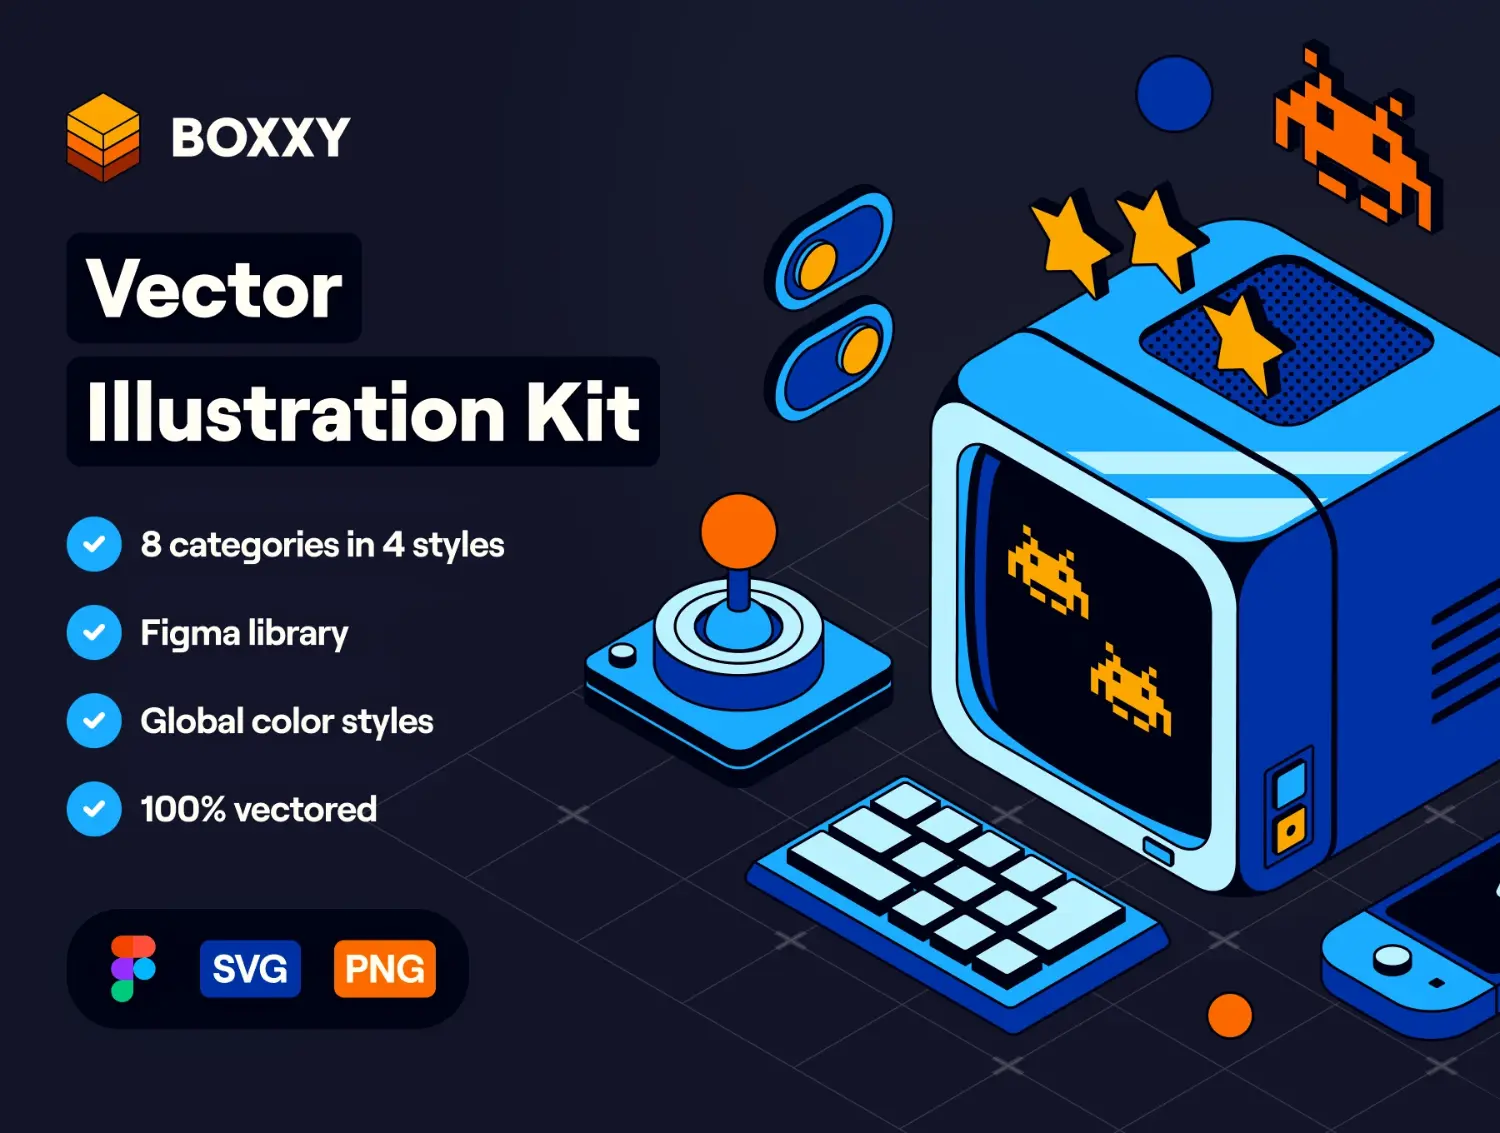 [VIP] BOXXY: Vector Illustration Kit